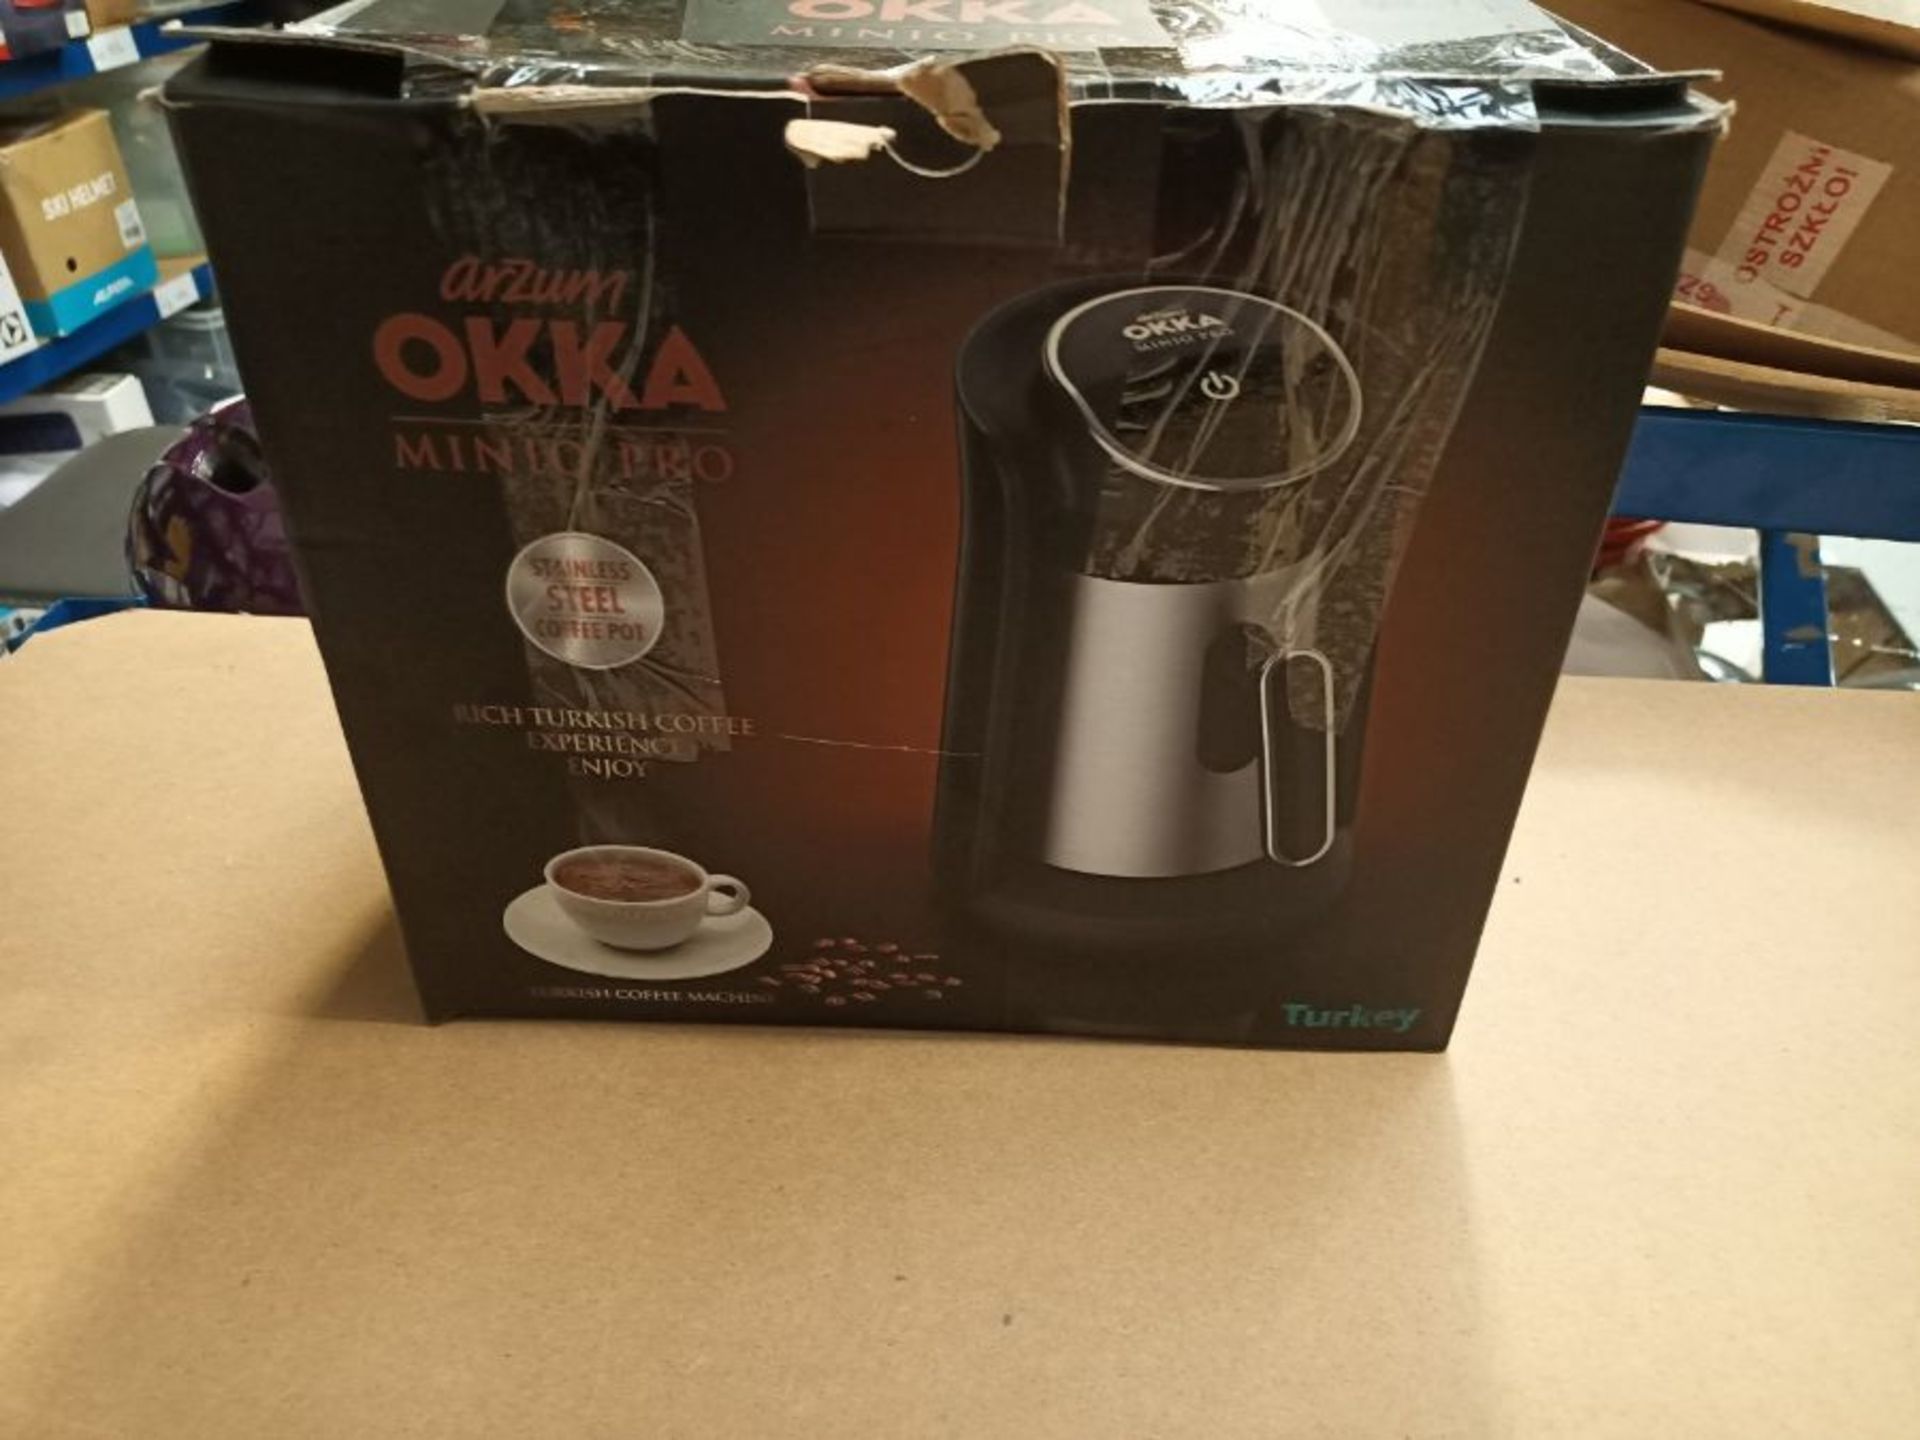 RRP £80.00 Arzum Okka OK0010-K Minio Pro Turkish Coffee Machine Chrome, 18/10 Steel - Image 2 of 3